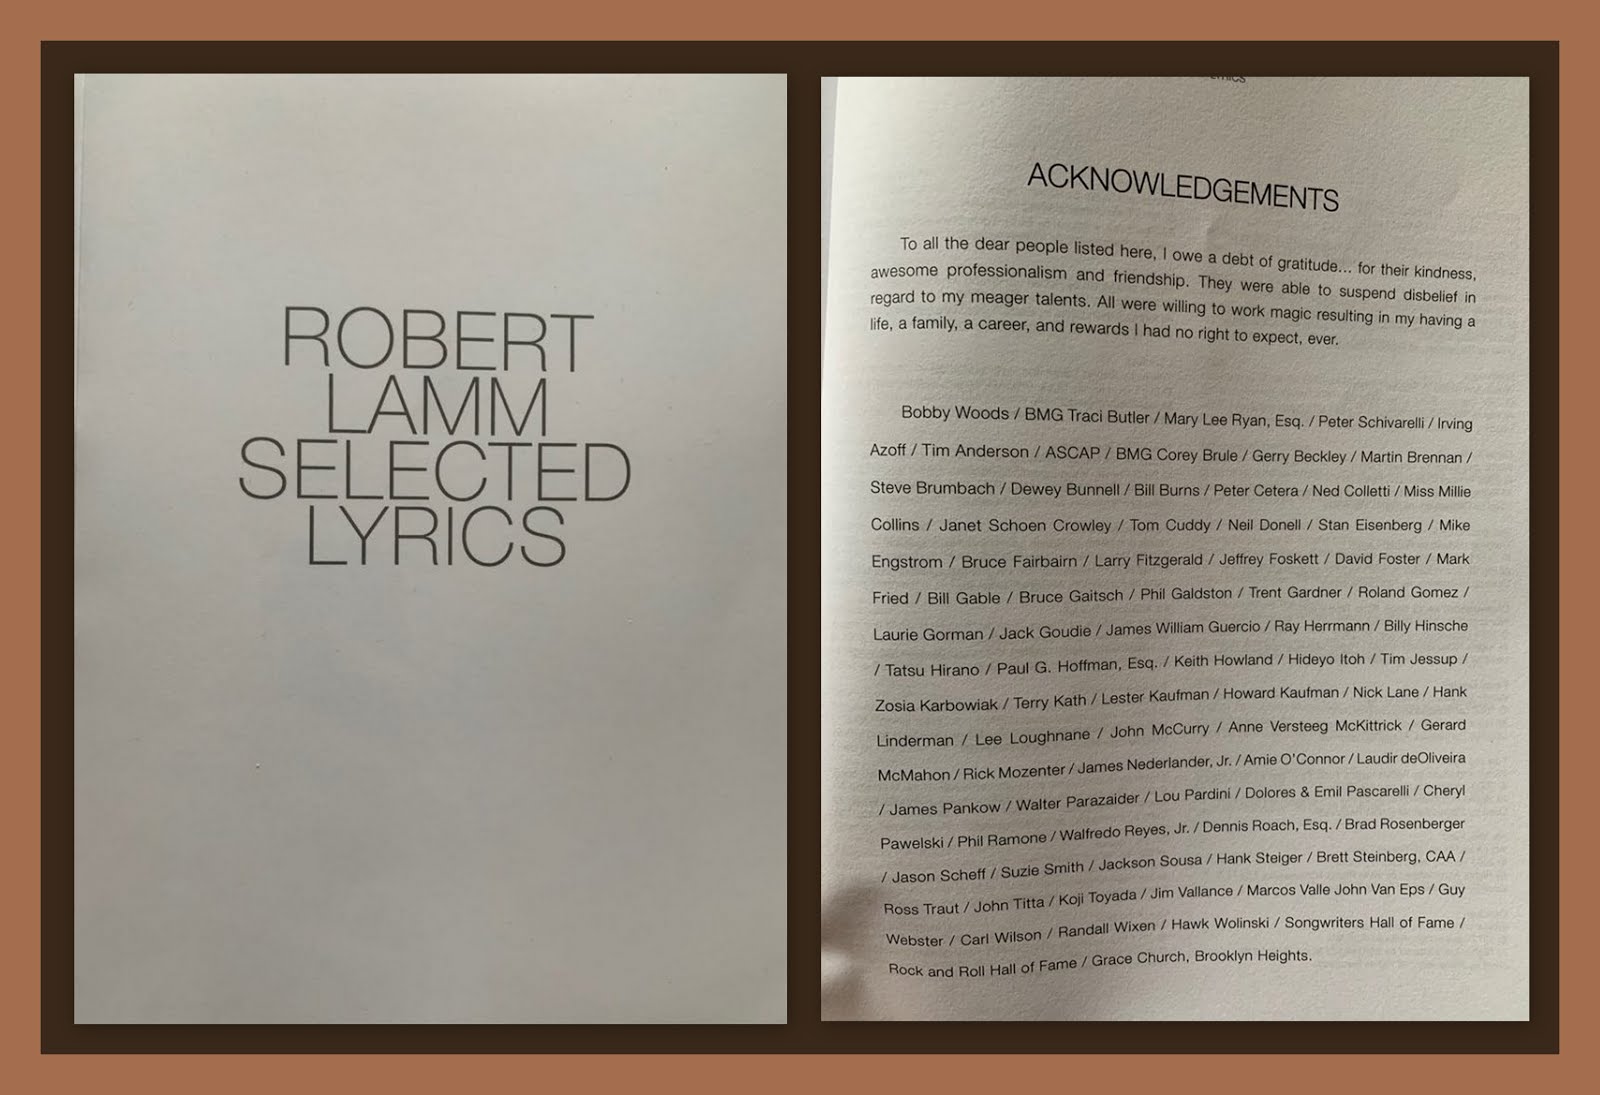 Robert Lamm Selected Lyrics - Click Photo To Purchase!